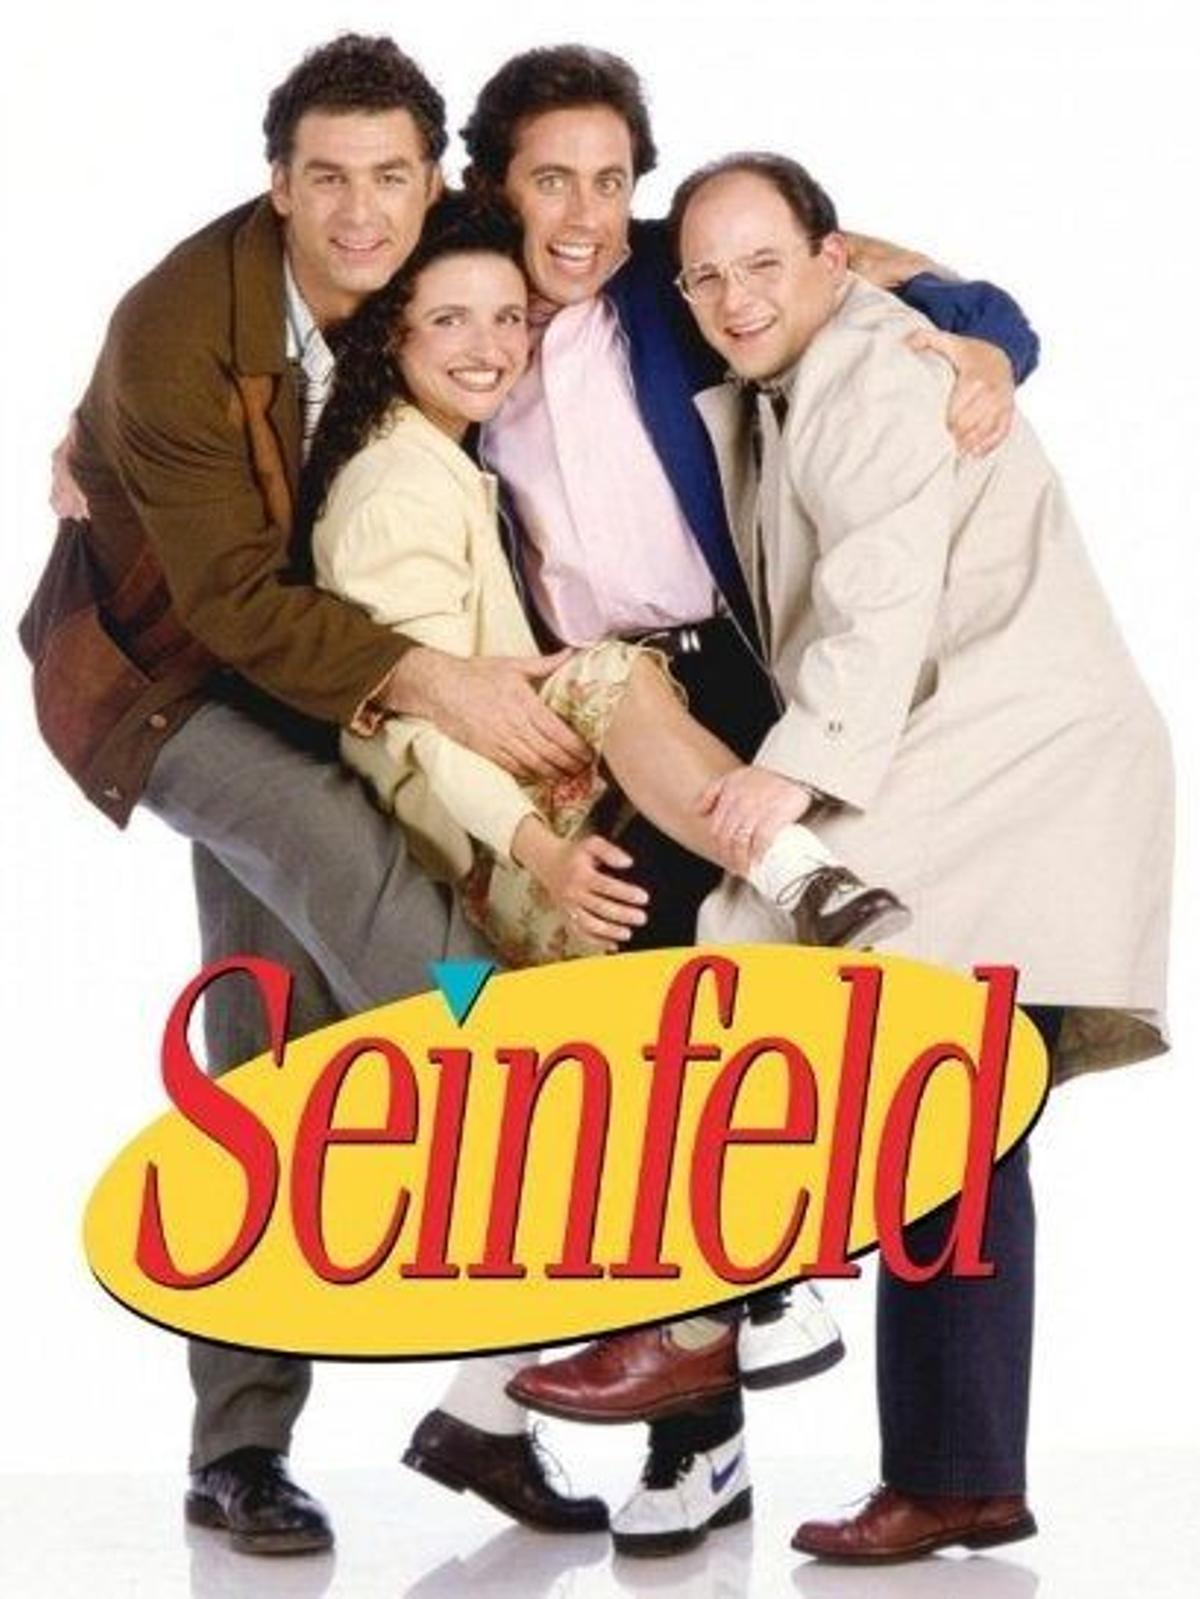 5. 'Seinfeld'